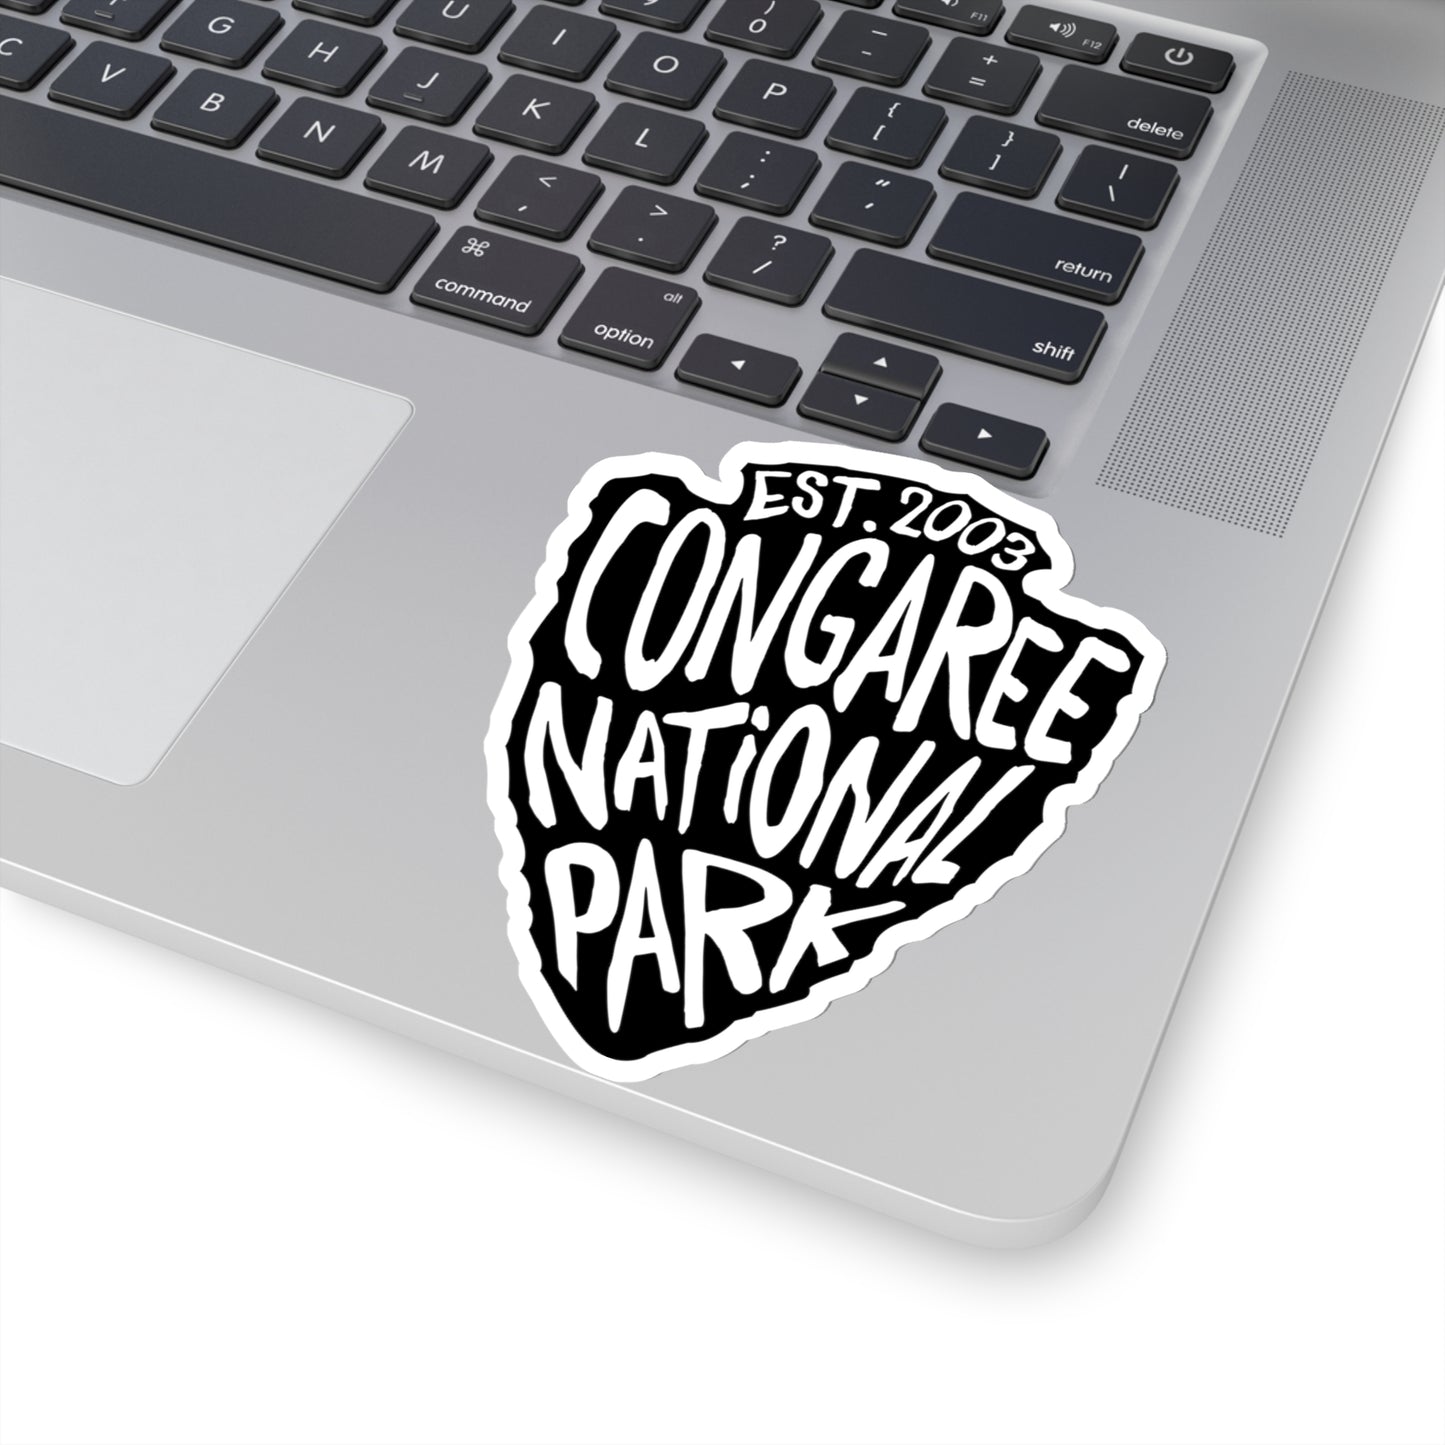 Congaree National Park Sticker - Arrow Head Design